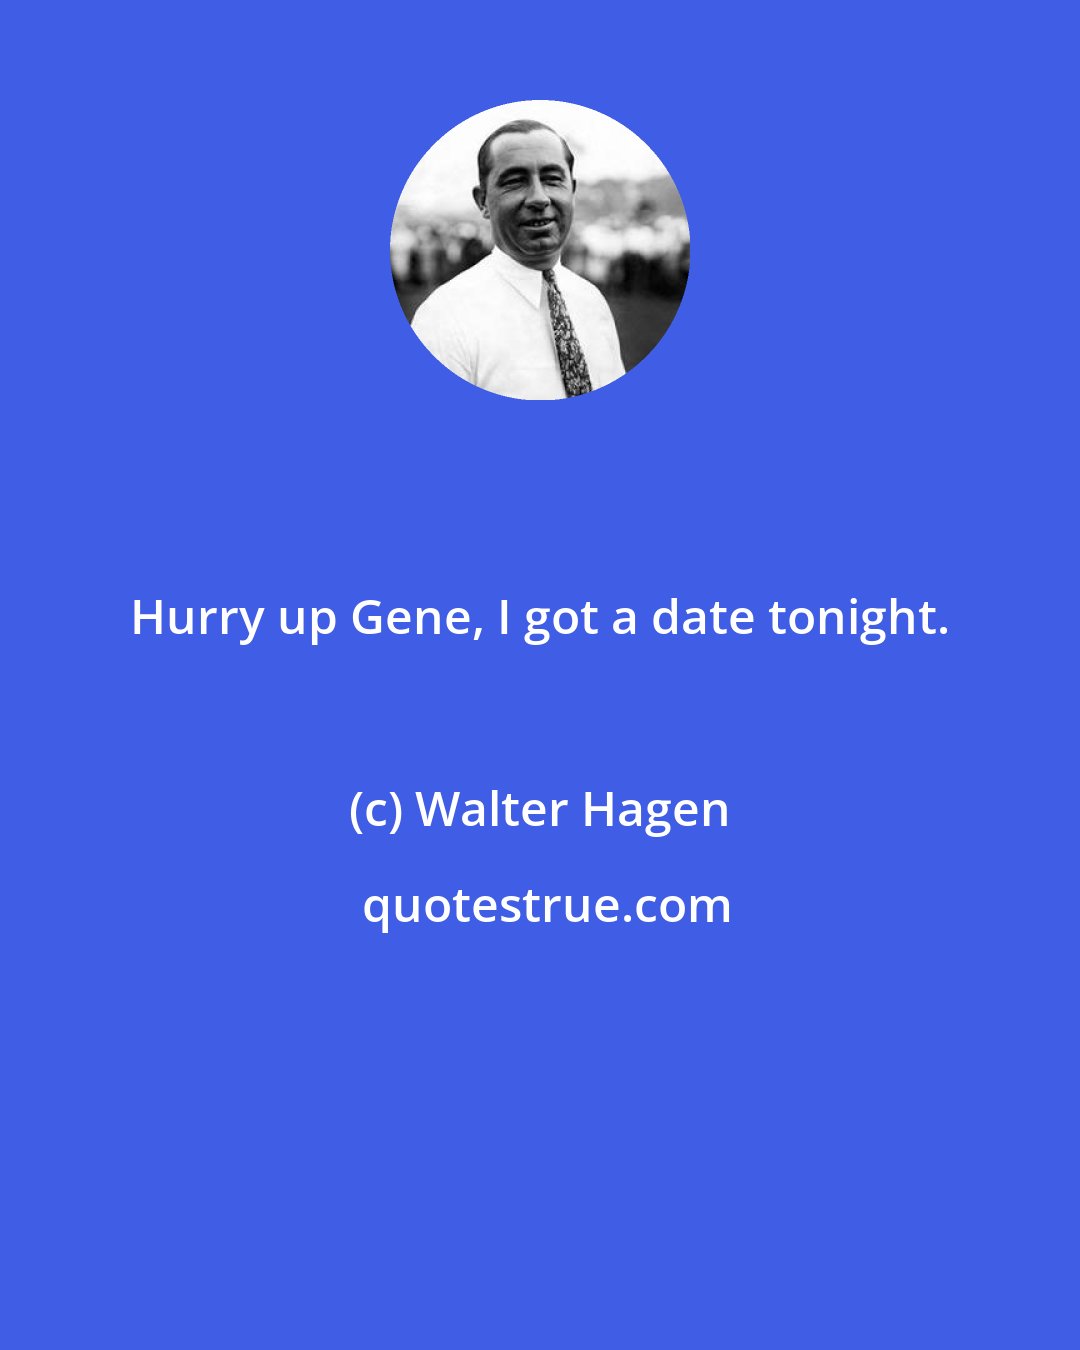 Walter Hagen: Hurry up Gene, I got a date tonight.